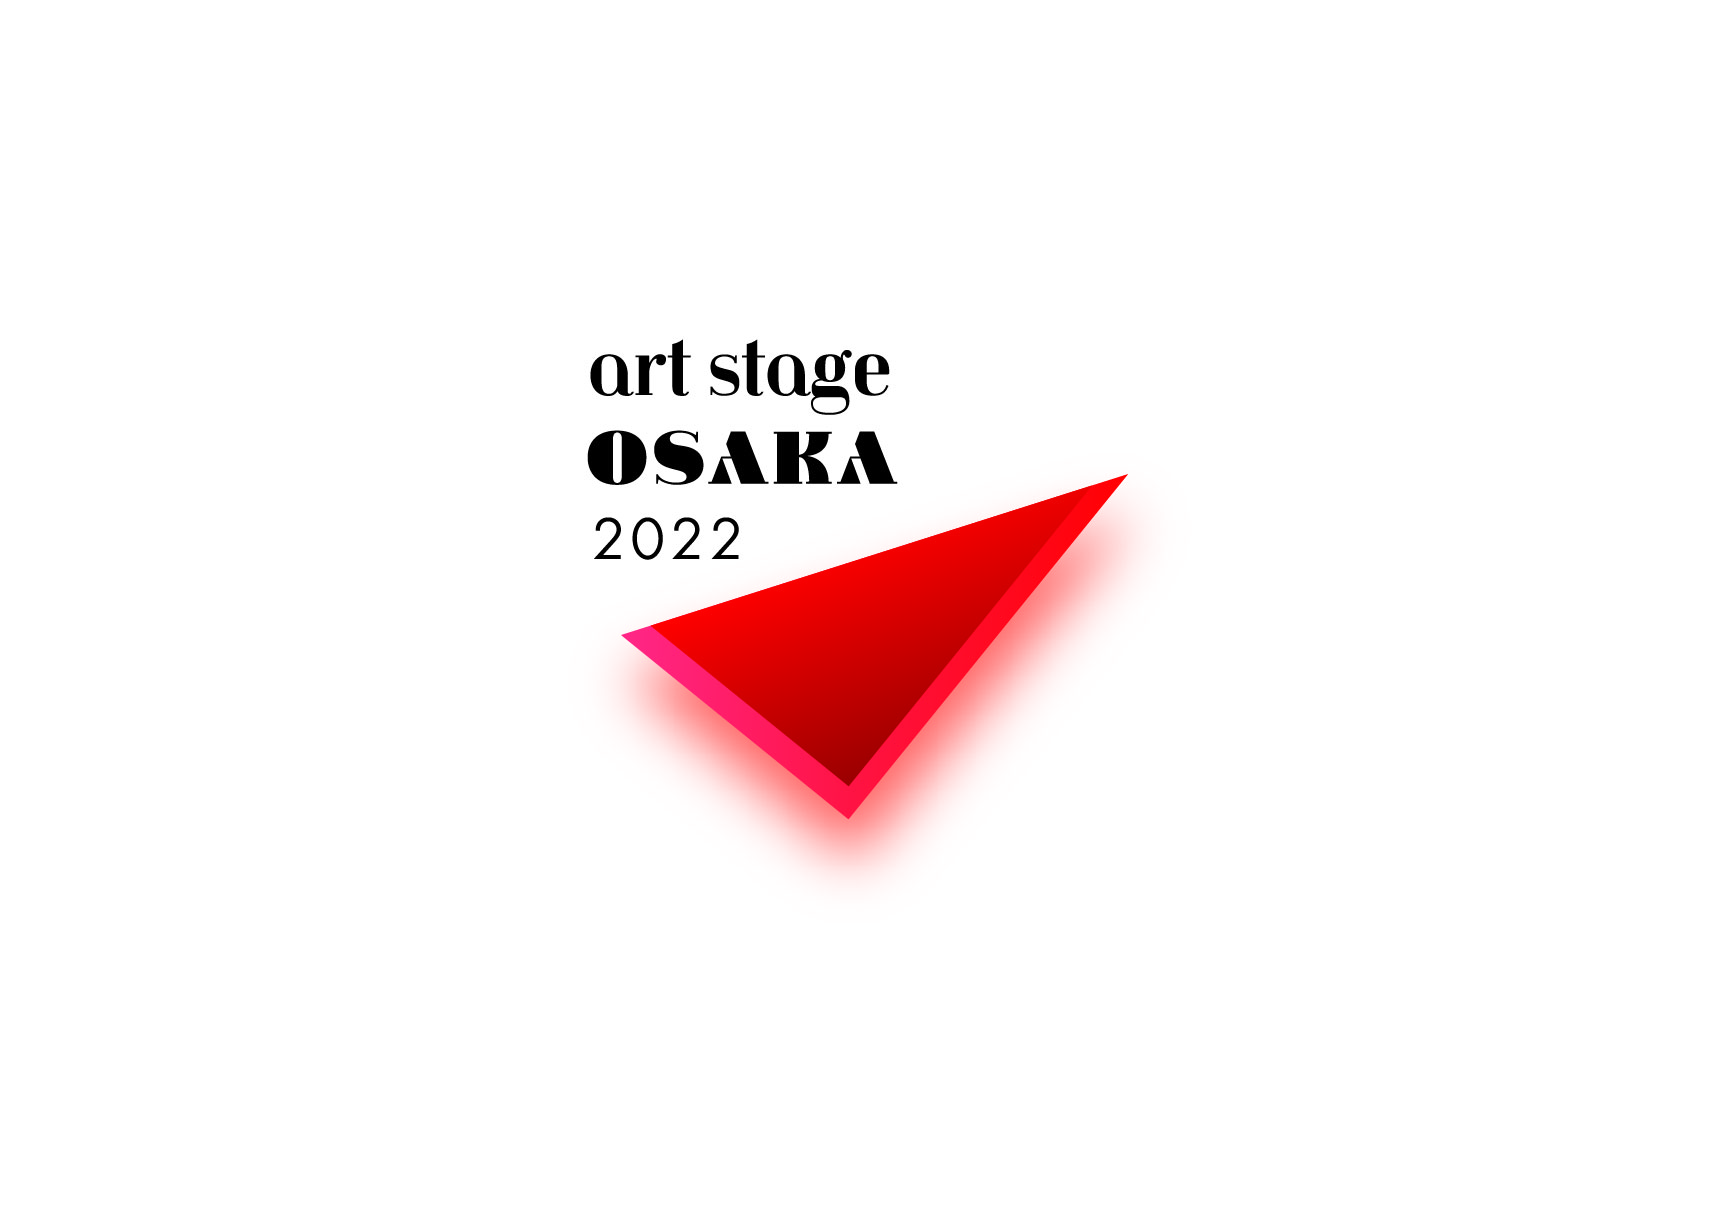 Seiji Matsumotoart stage OSAKA 2022